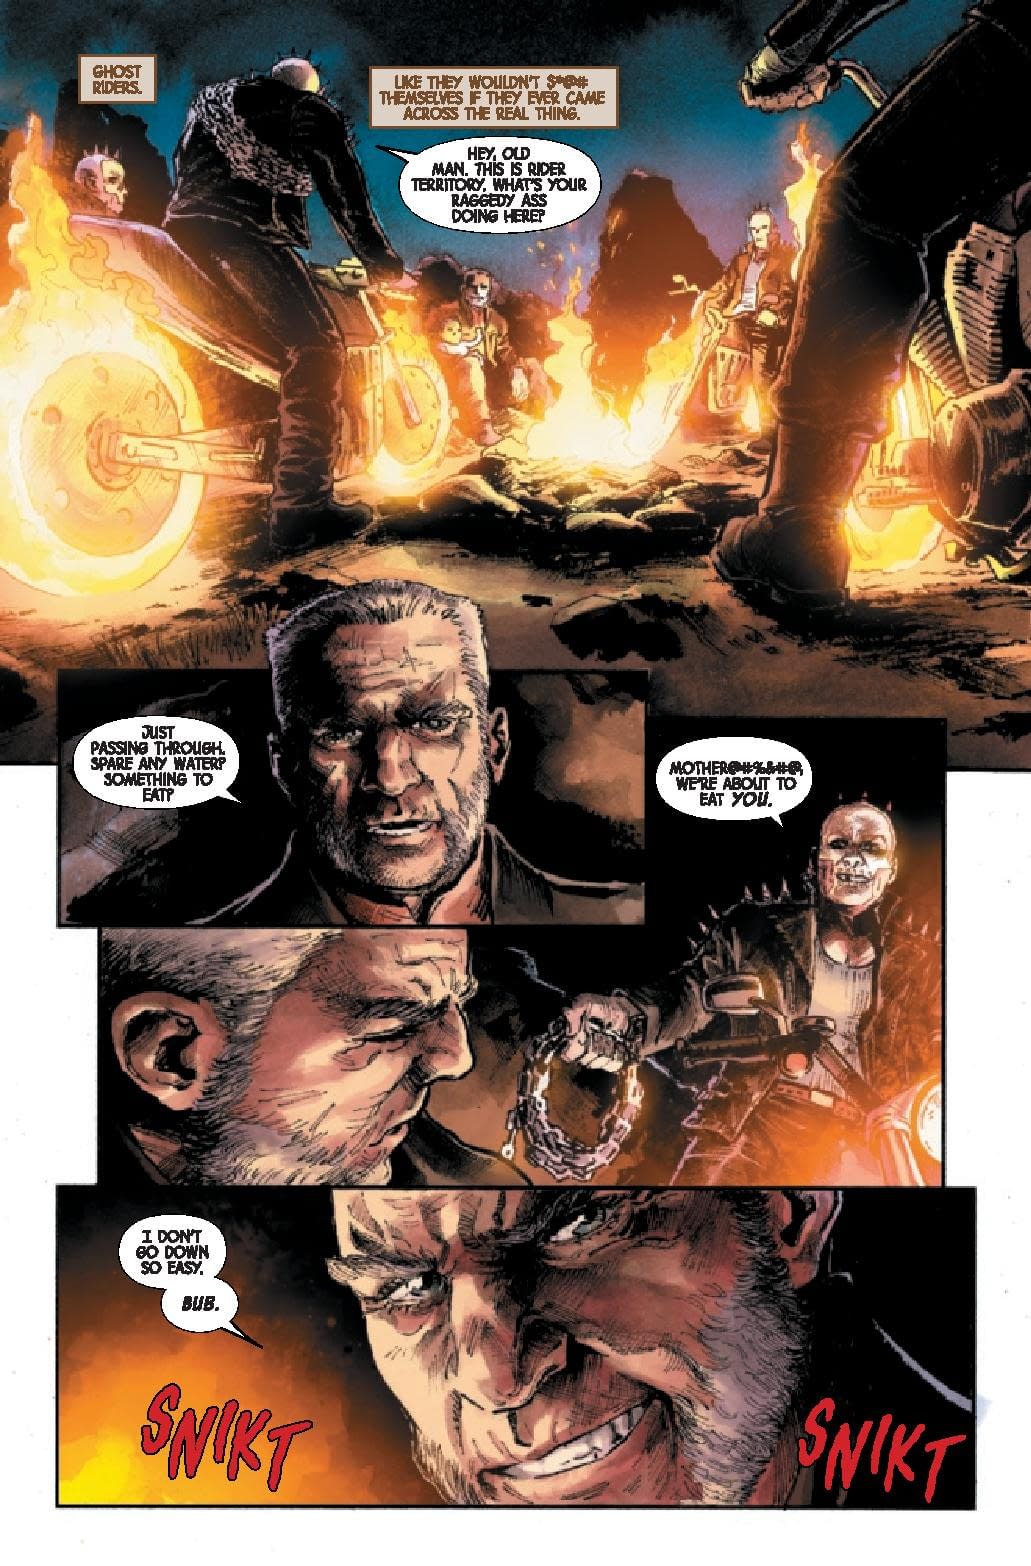 Wastelanders: Wolverine #1 Preview: Young Man Old Man Logan Returns